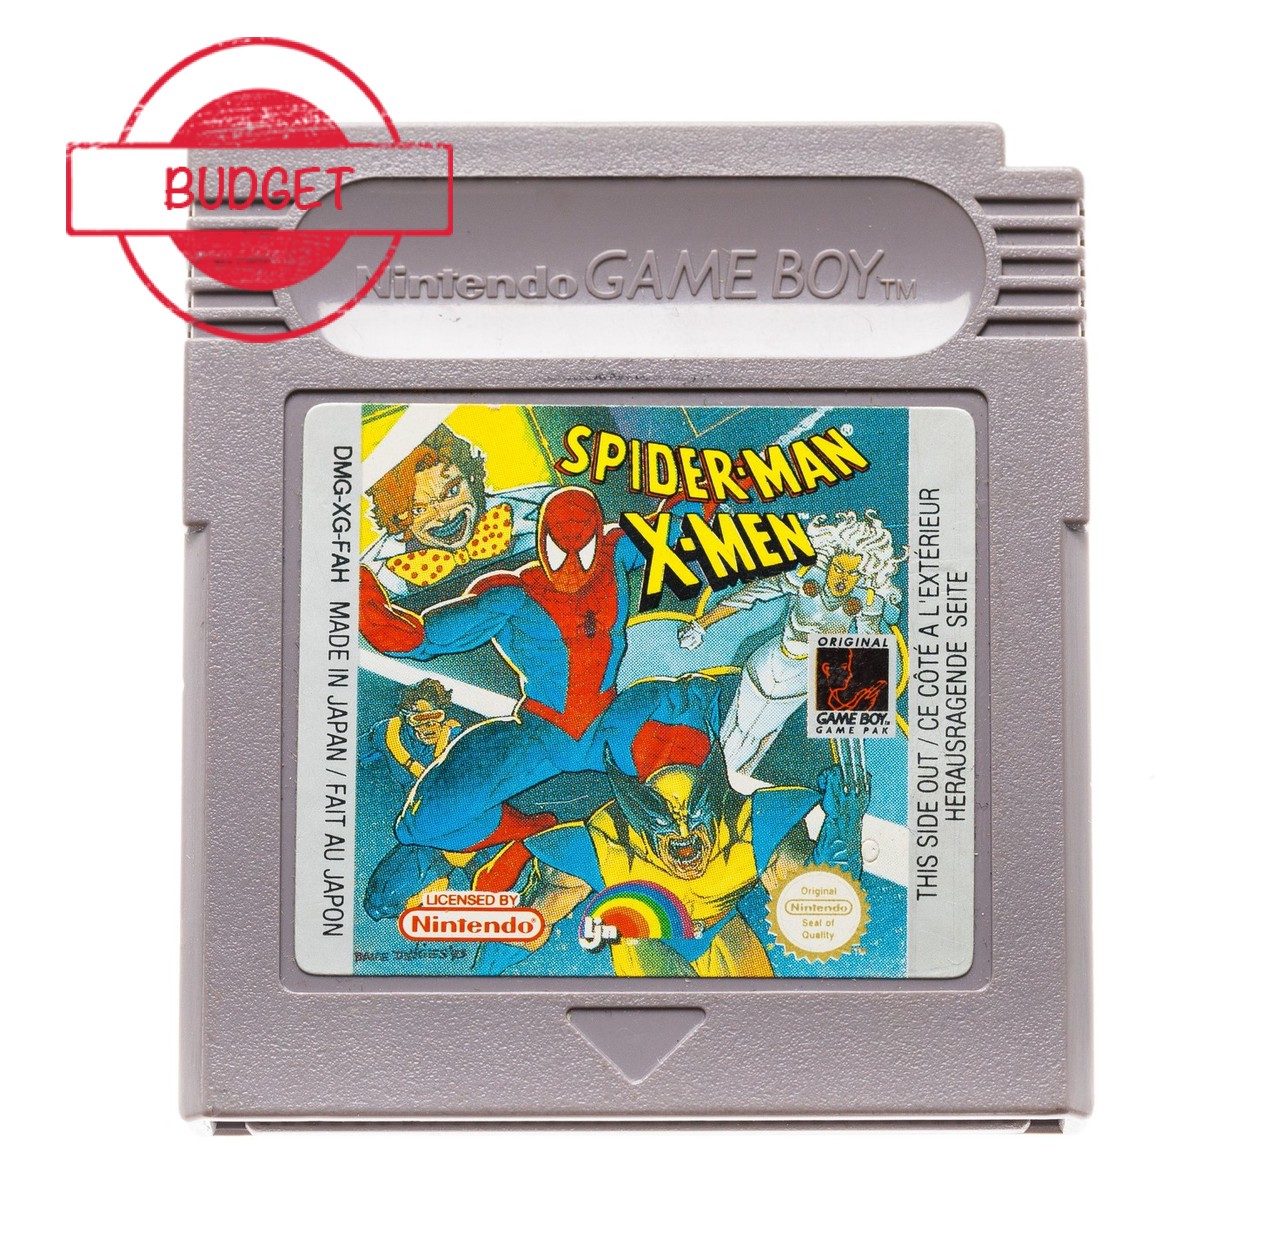 Spider-Man X-Men - Budget Kopen | Gameboy Classic Games